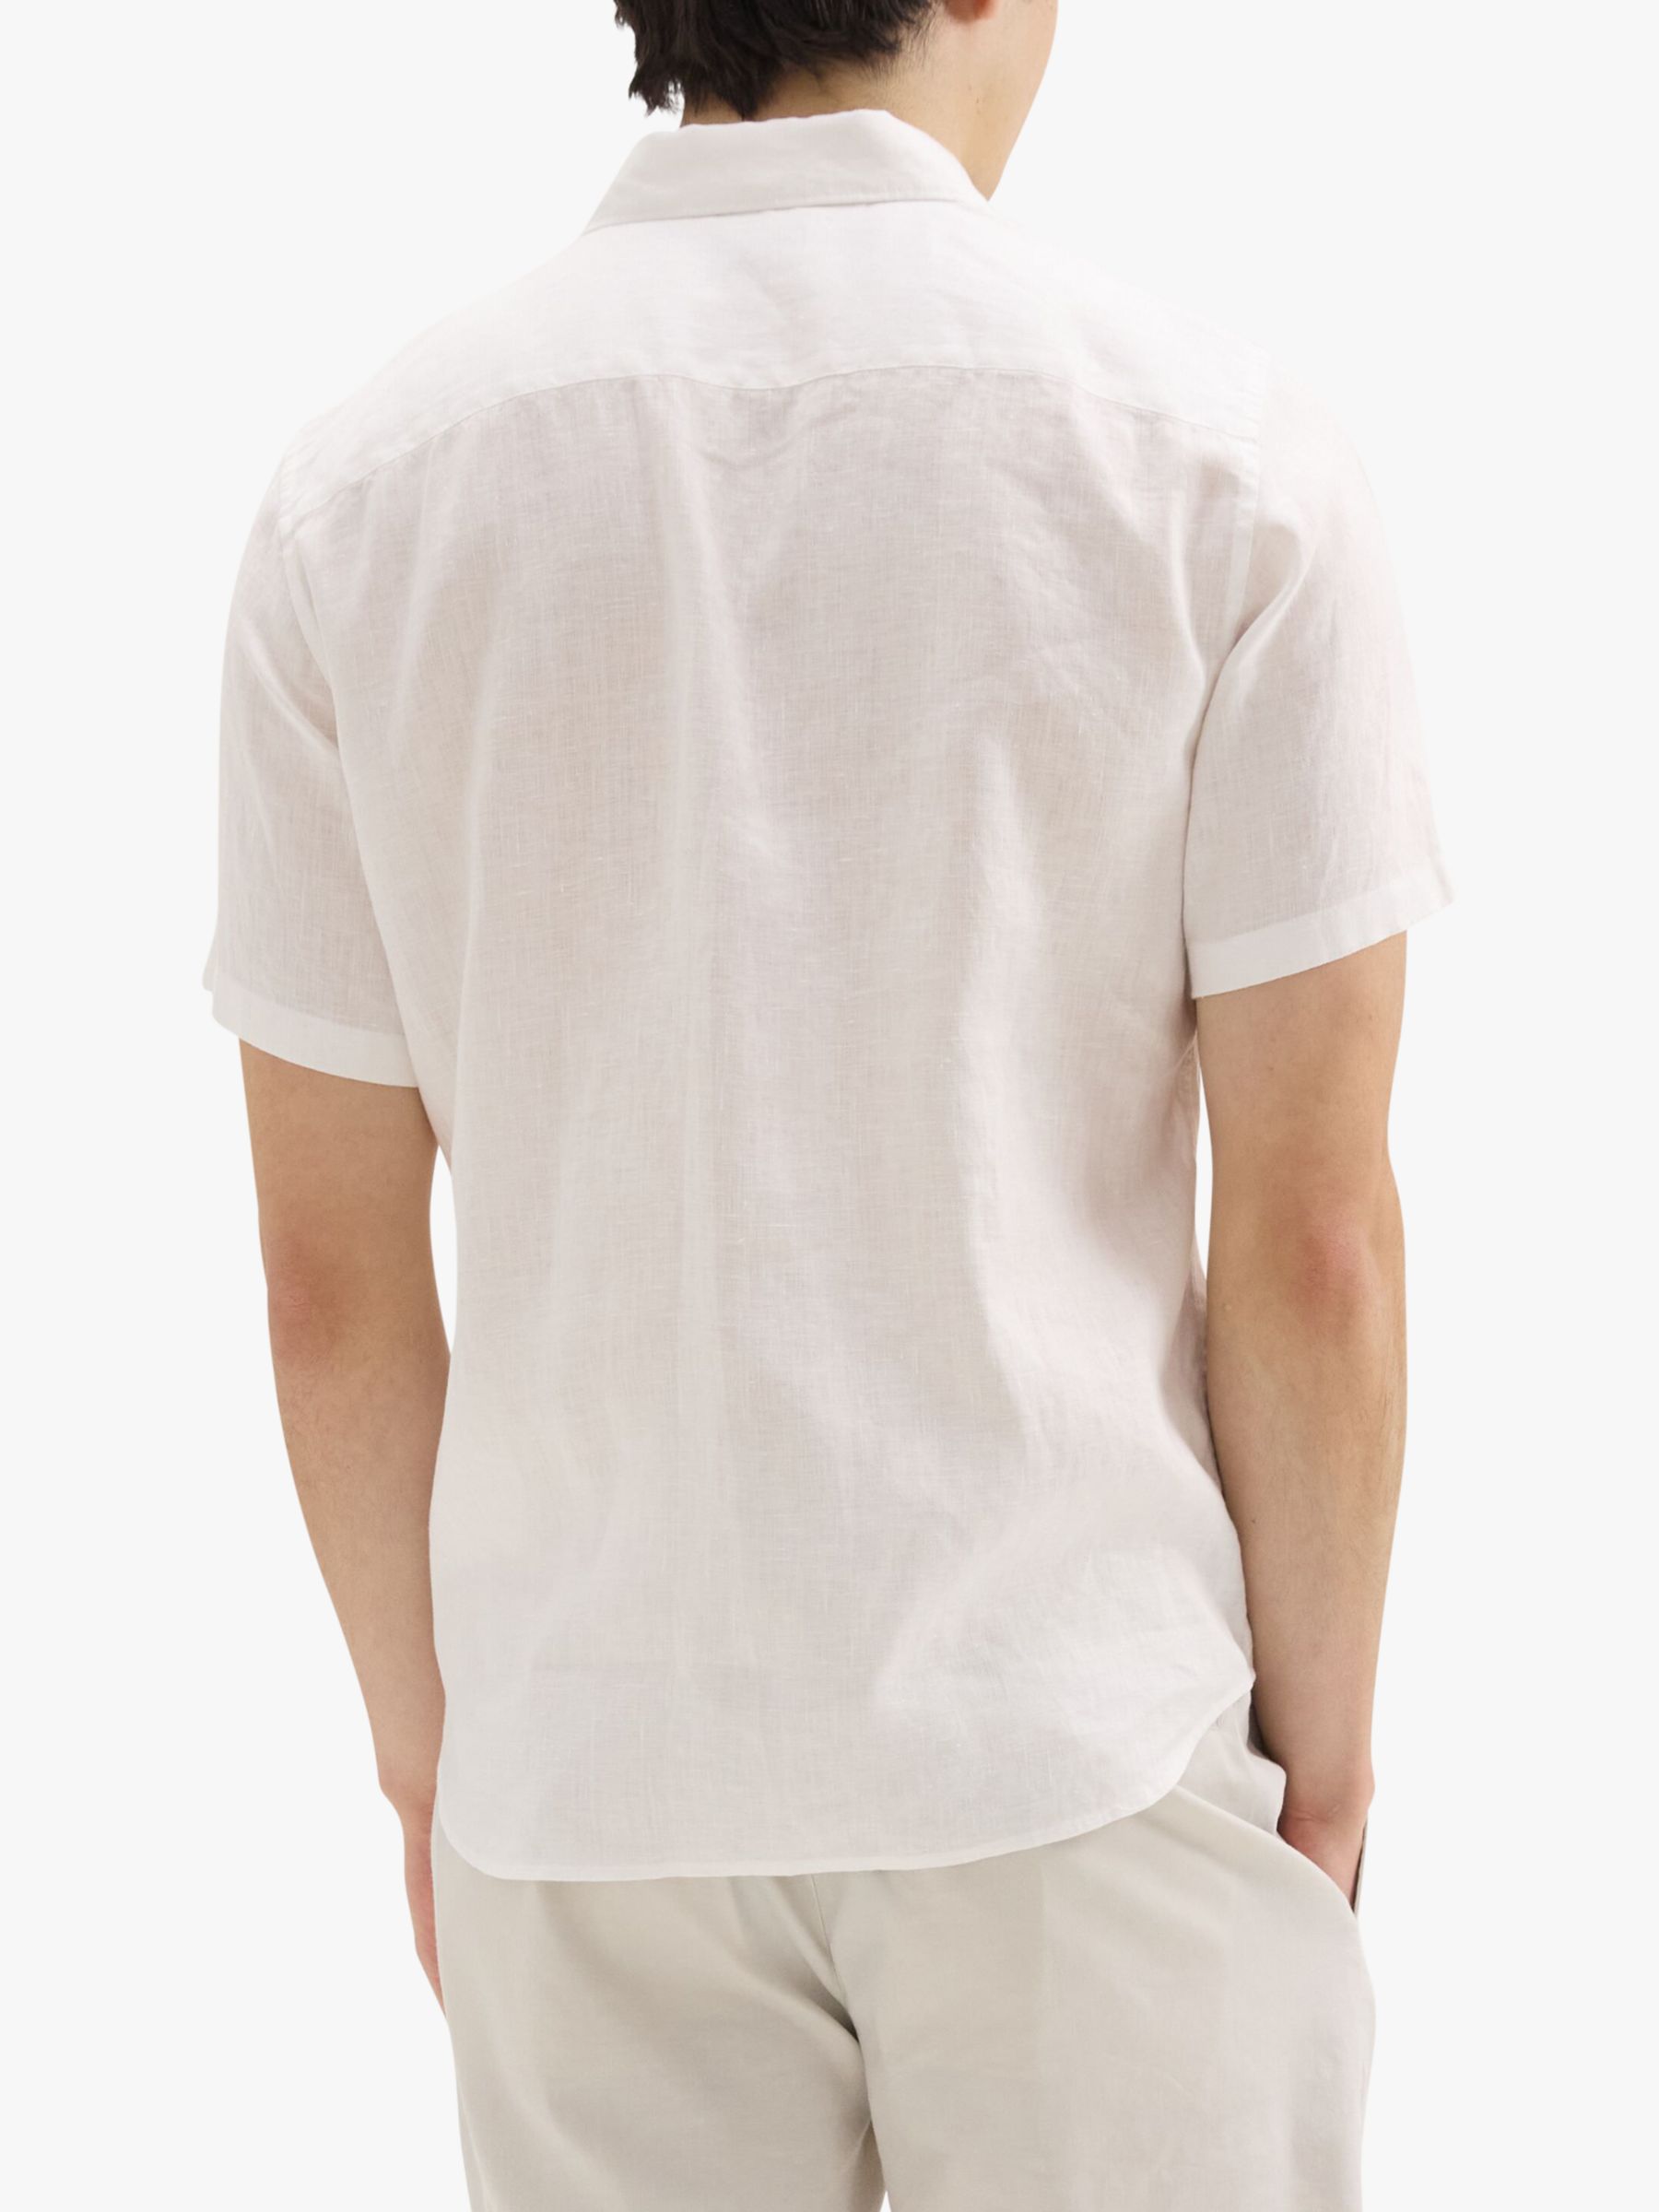 Theory Linen Shirt, White, S